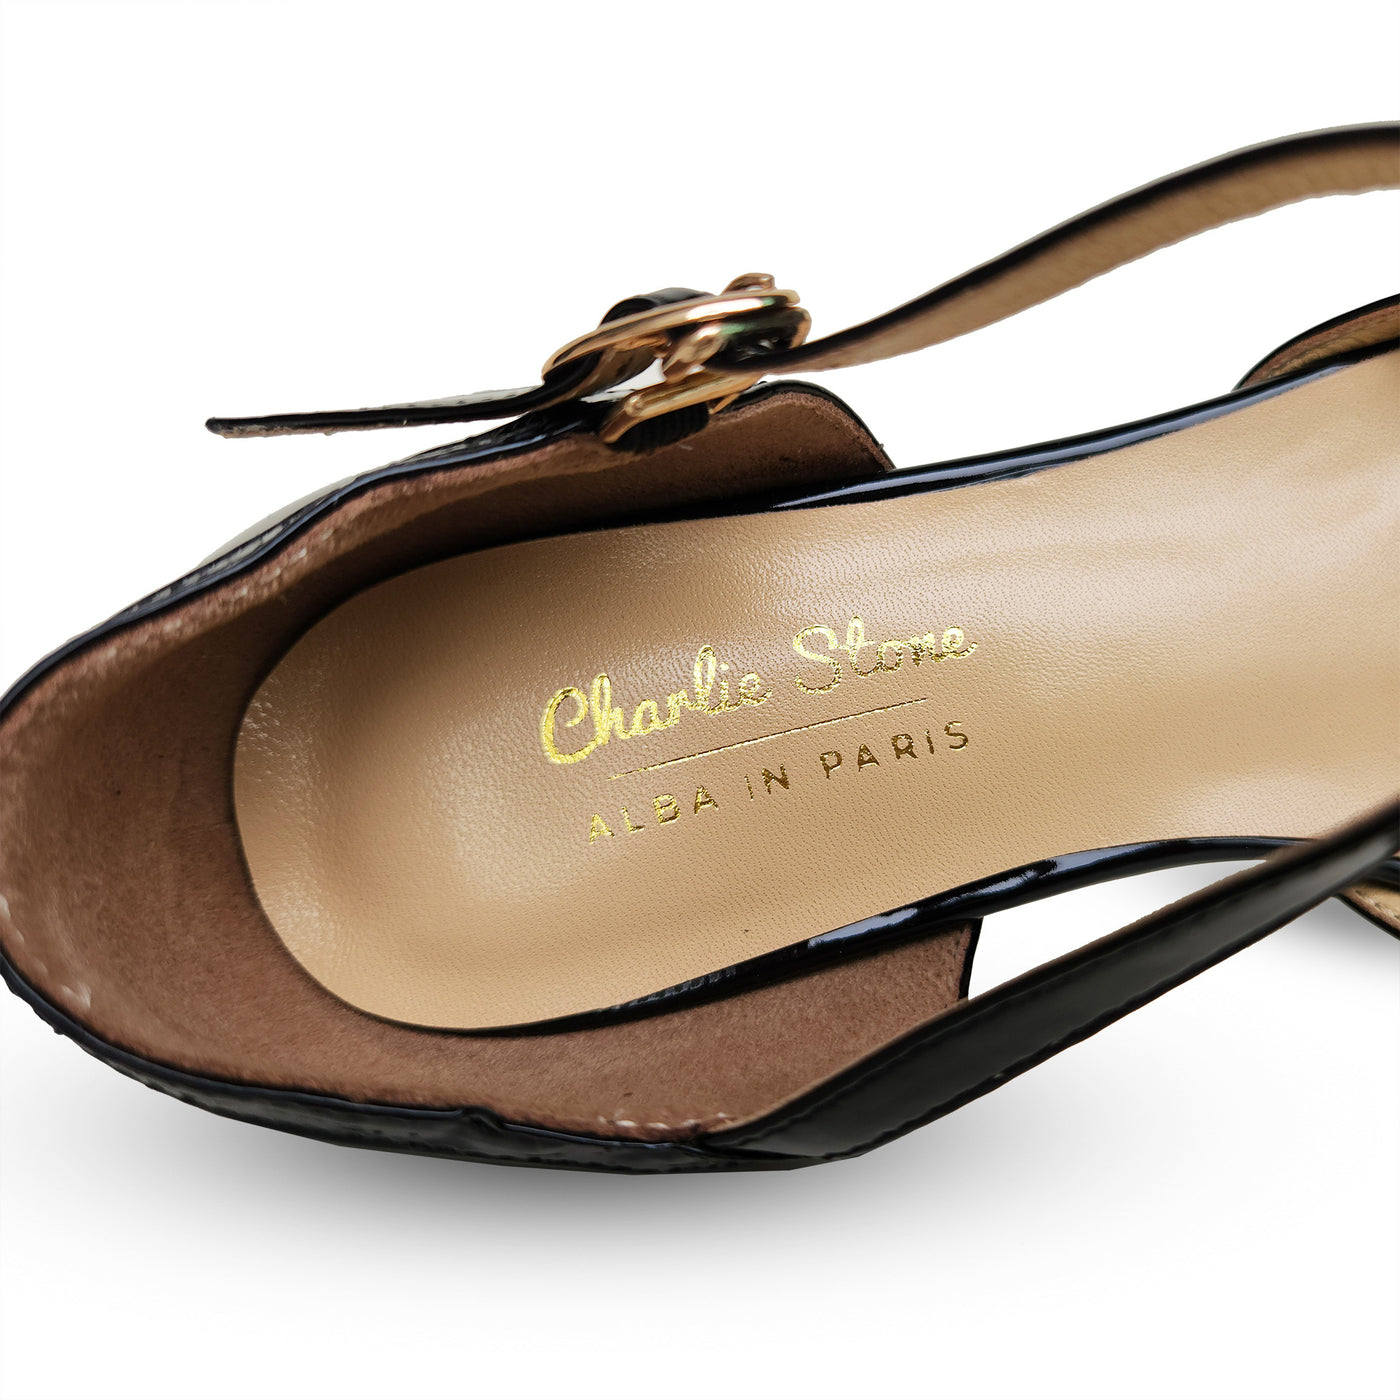 Alba | Shoes | Alba Grace Jeweled Heels | Poshmark